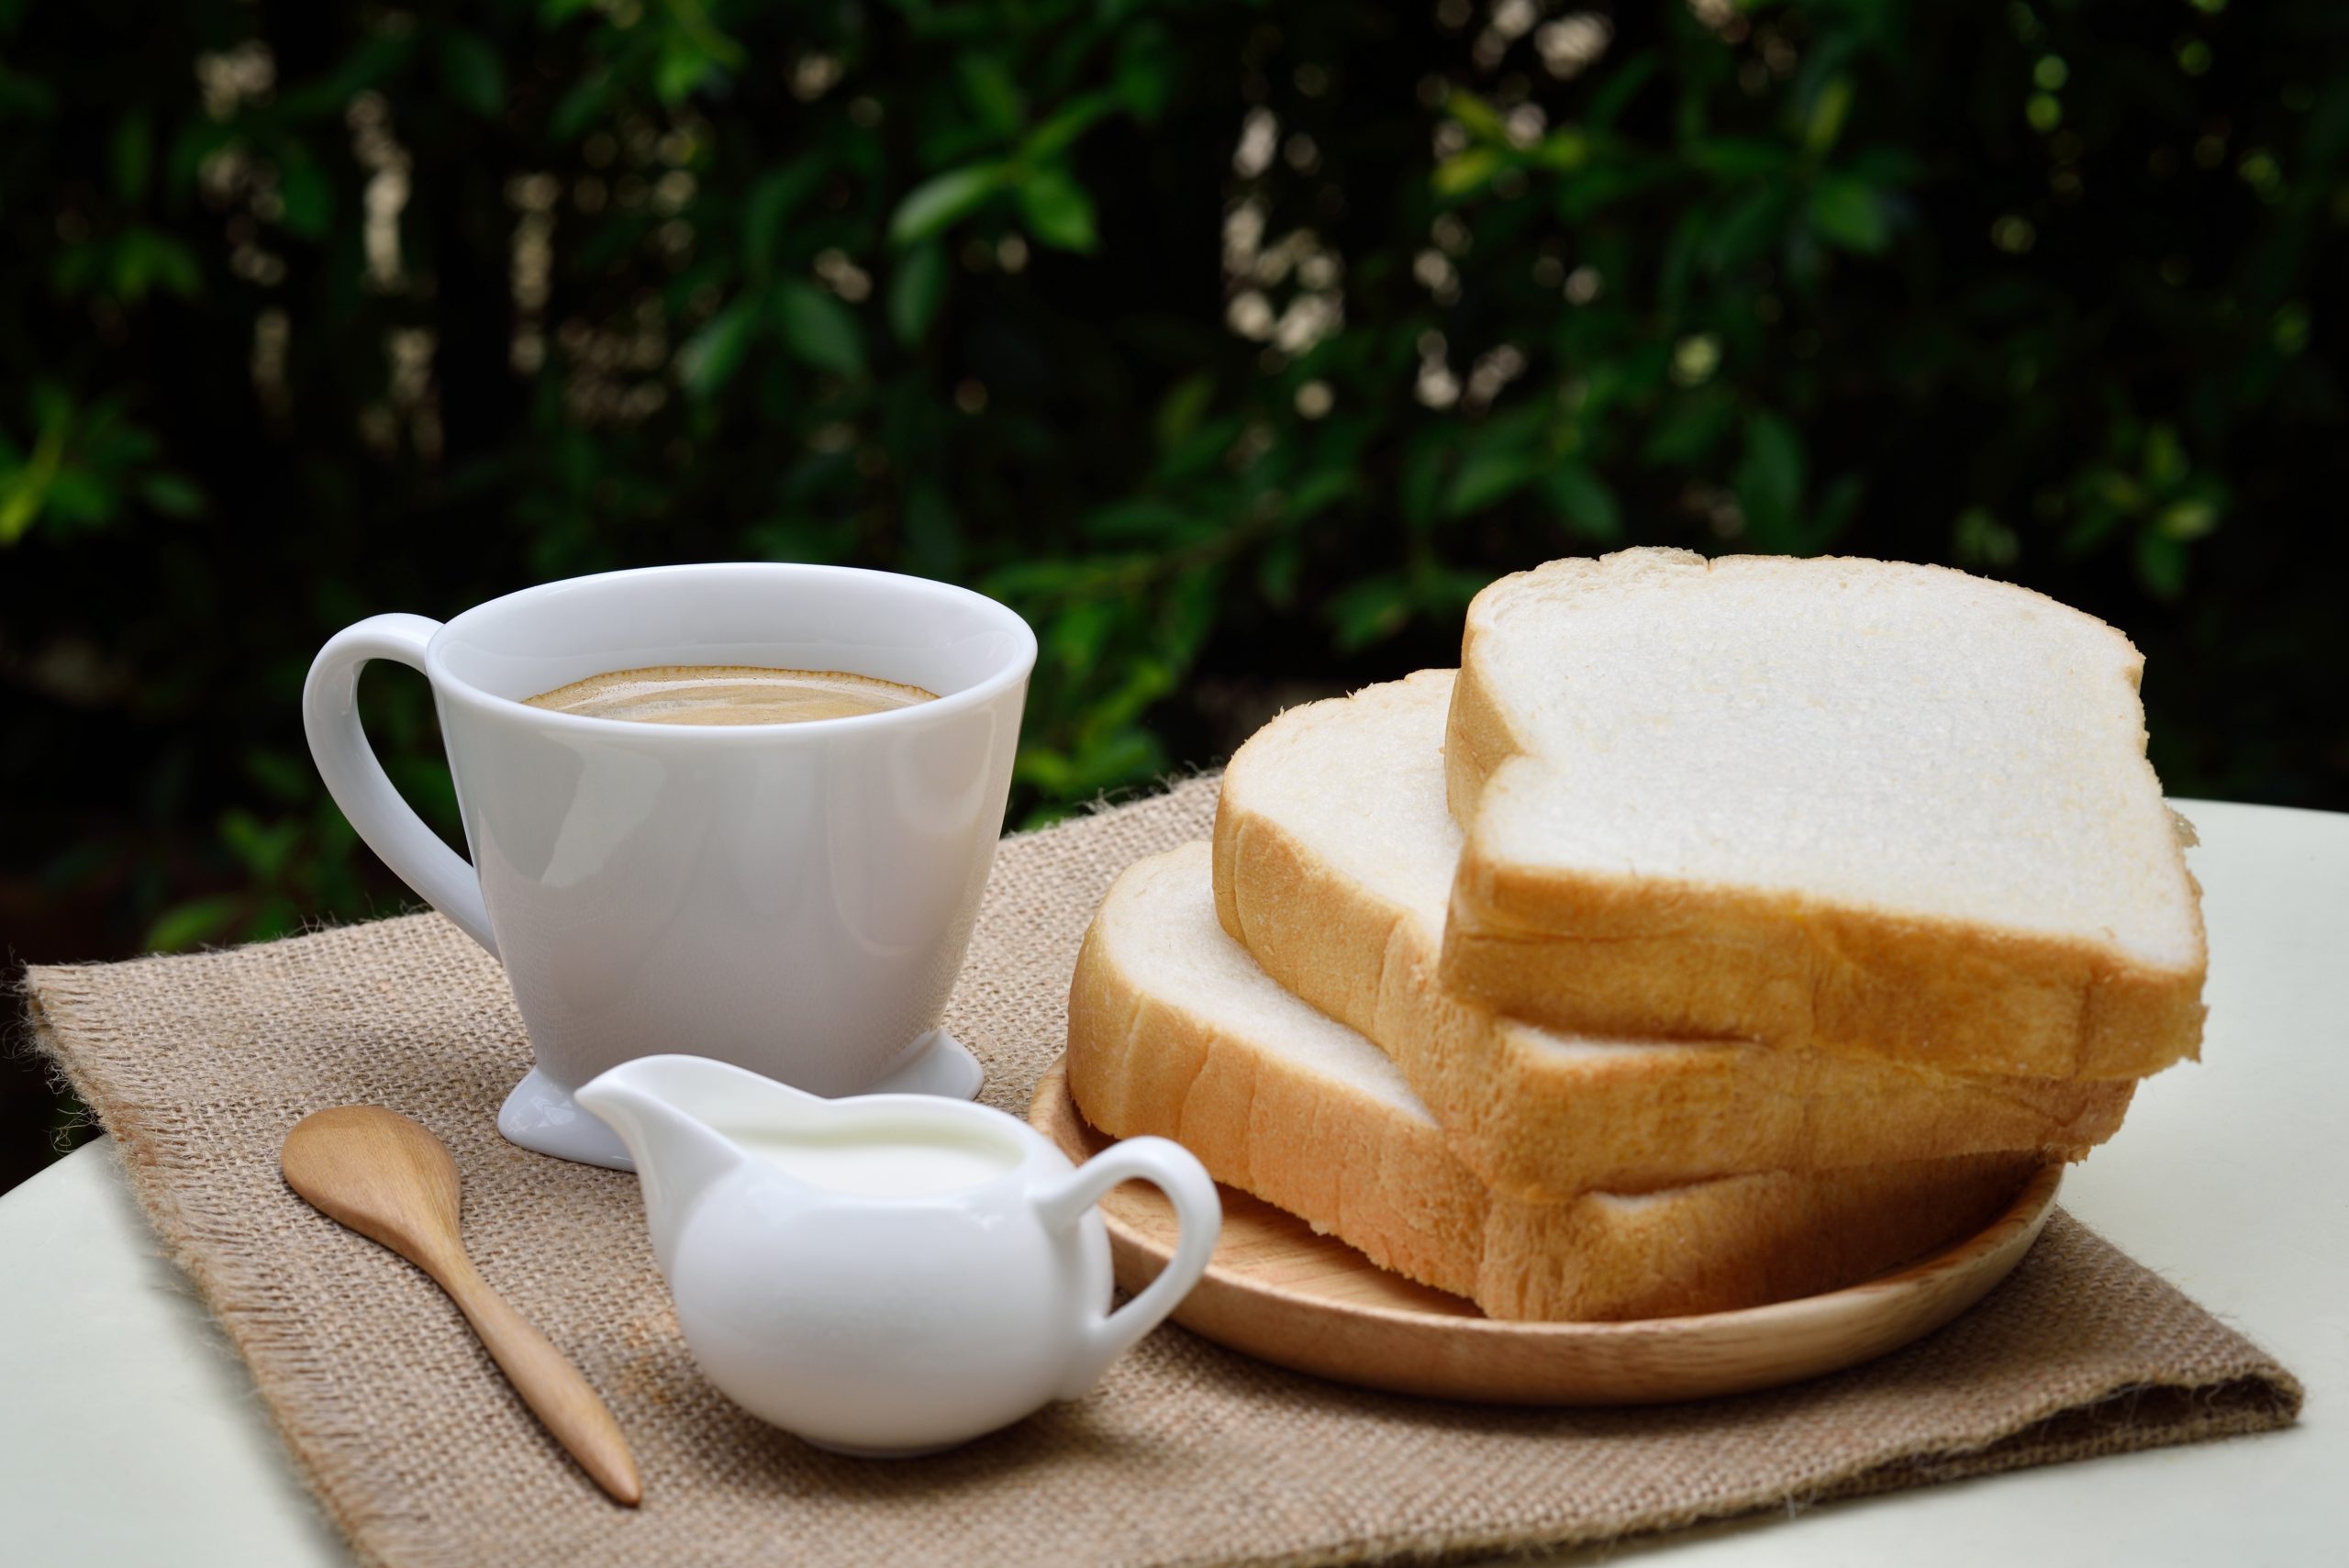 Hamilton Beach Bread Maker: Your Homemade Bread Solution